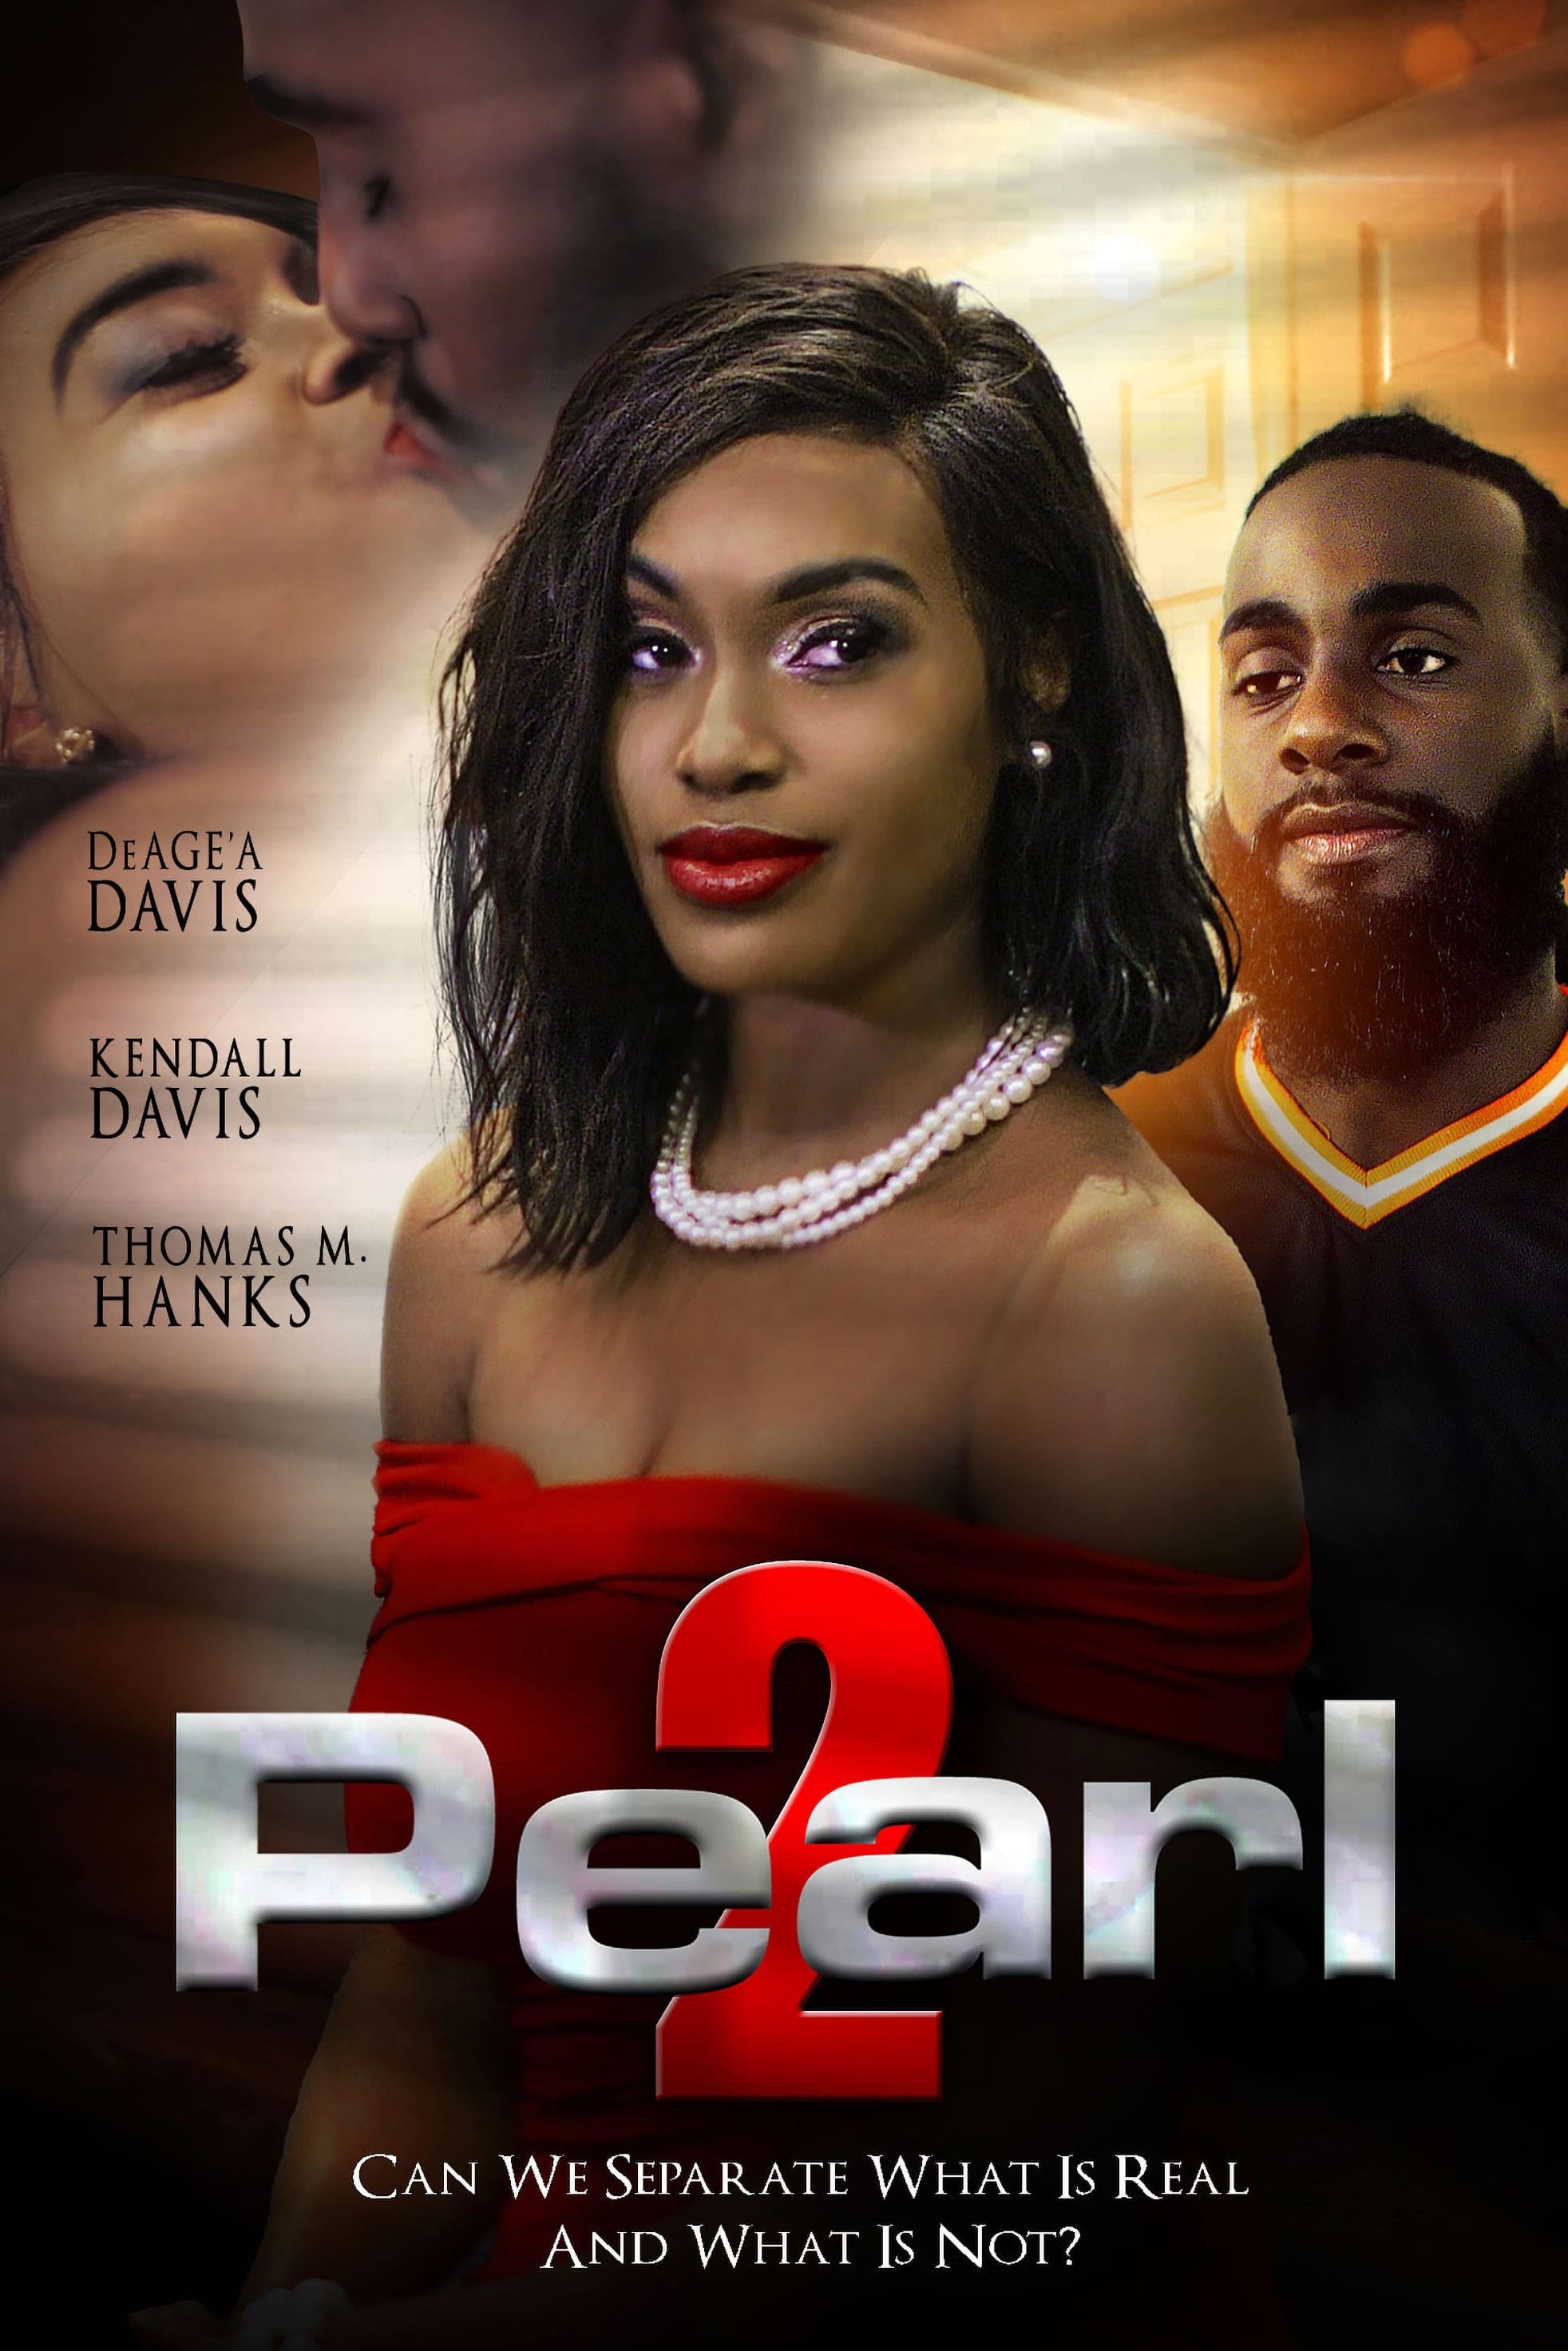 Pearl 2 film